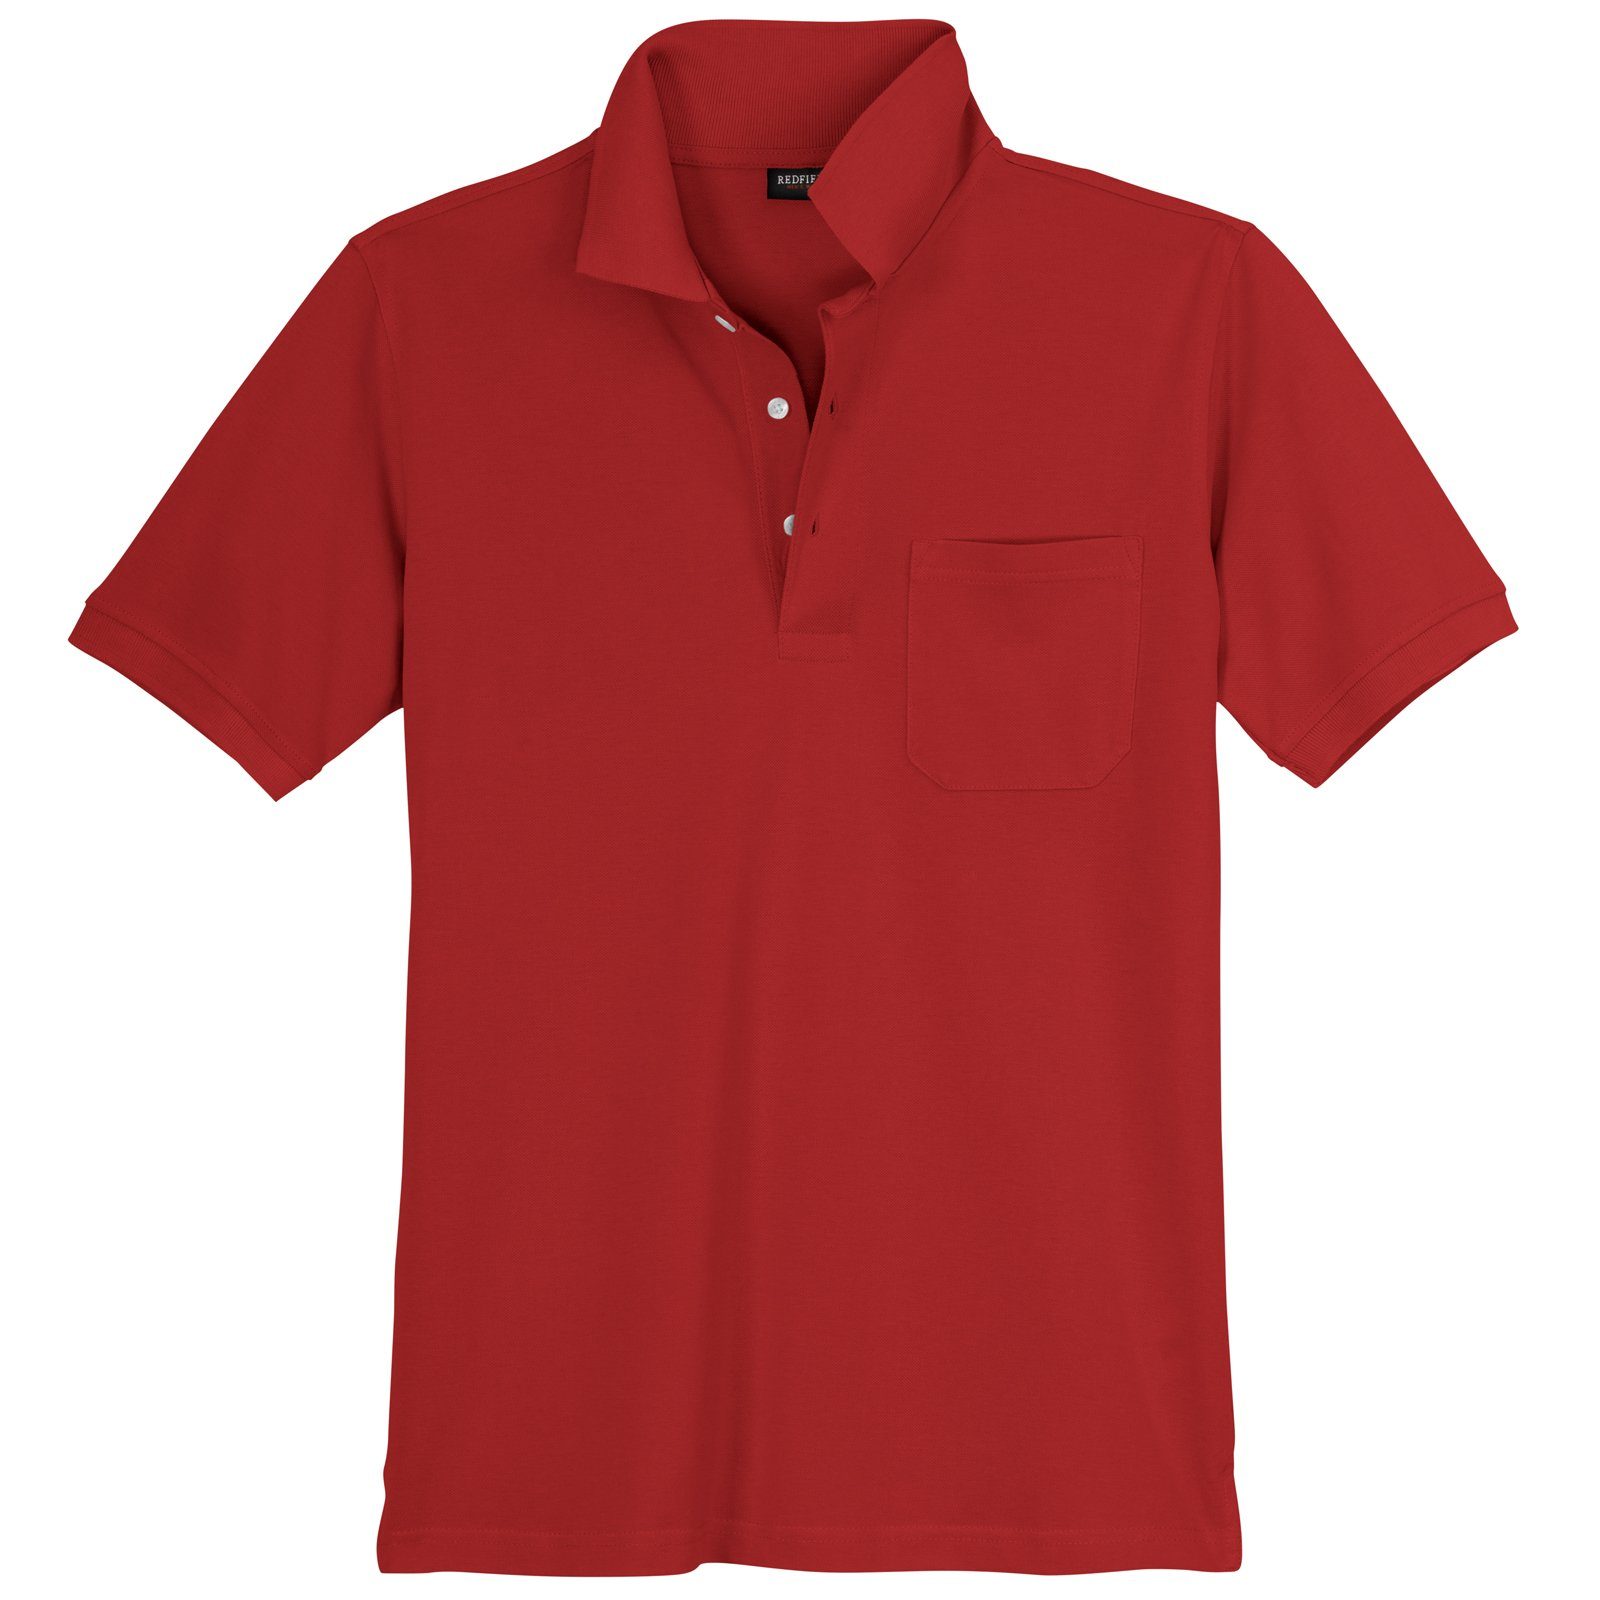 Ralph Poloshirt Große Größen Herren Redfield redfield Poloshirt Basic rot